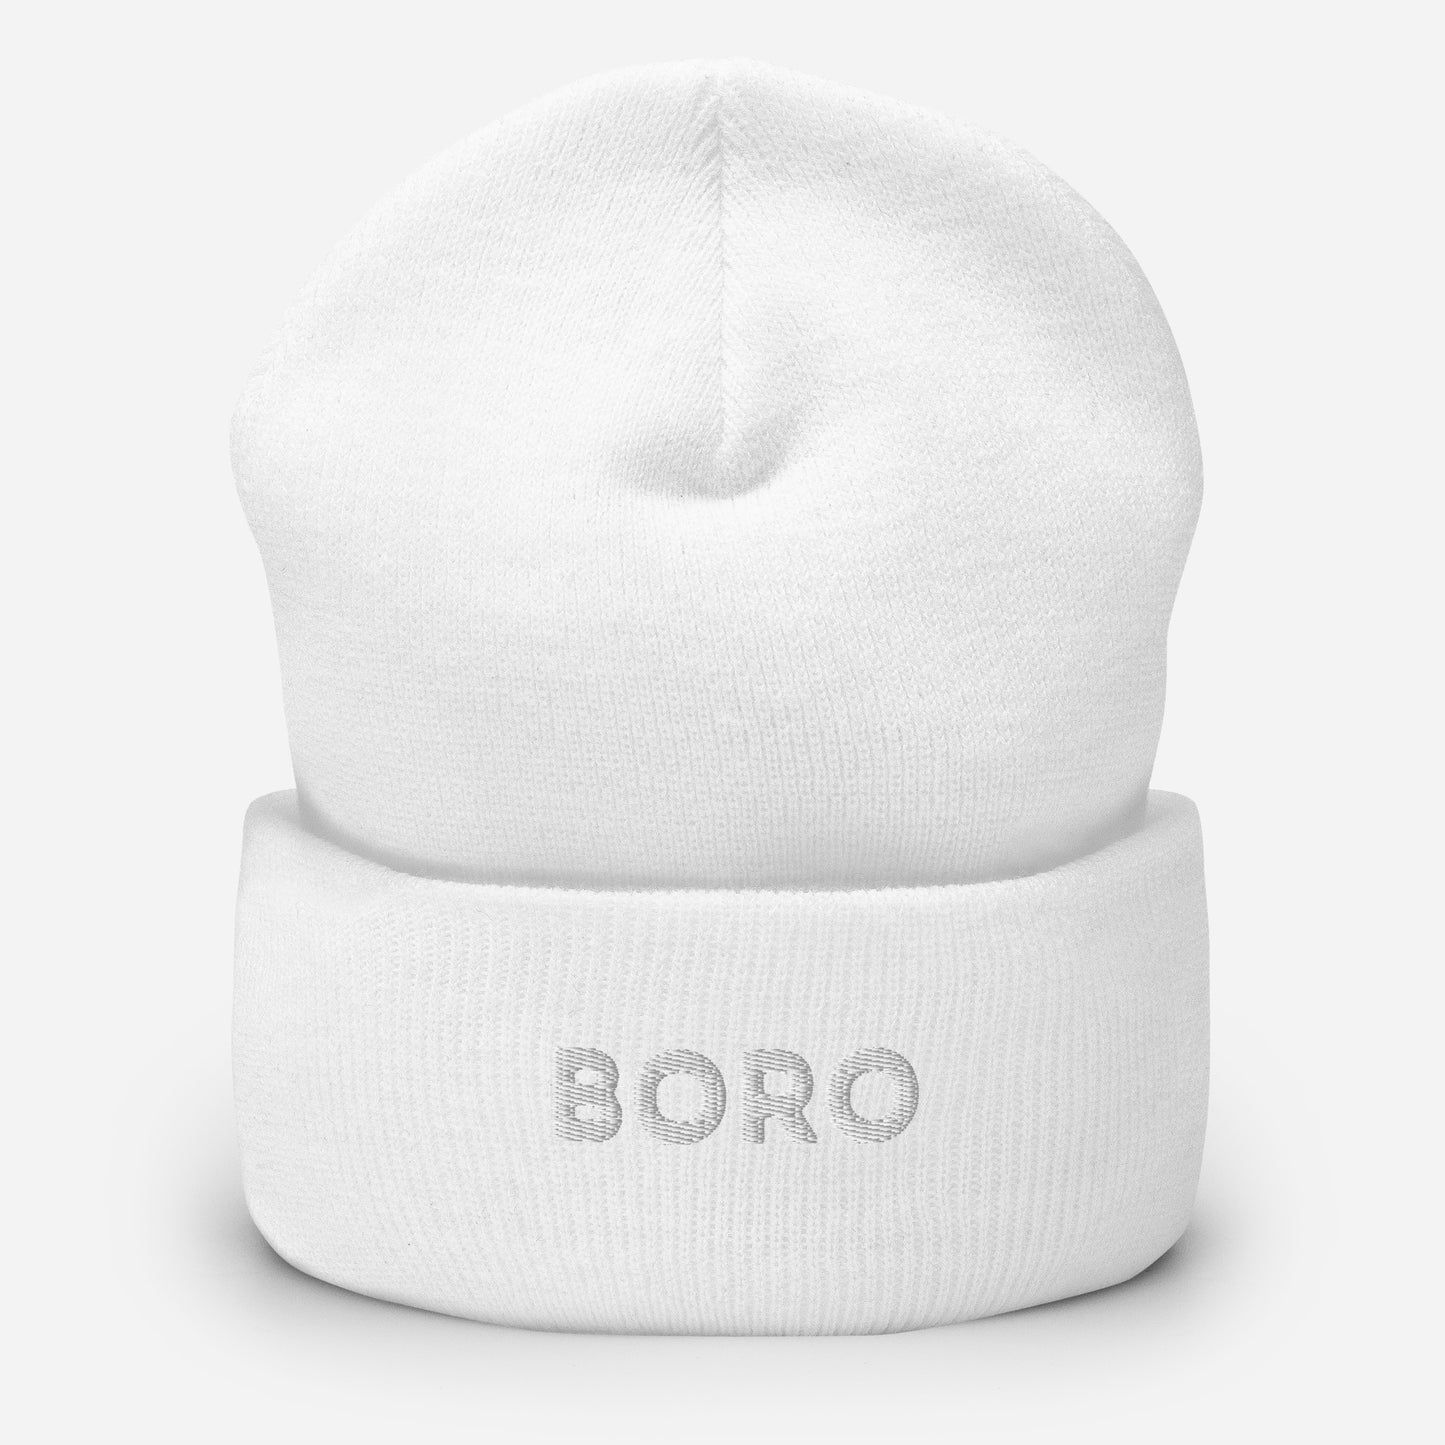 Boro (White embroidery) Cuffed Beanie Hat